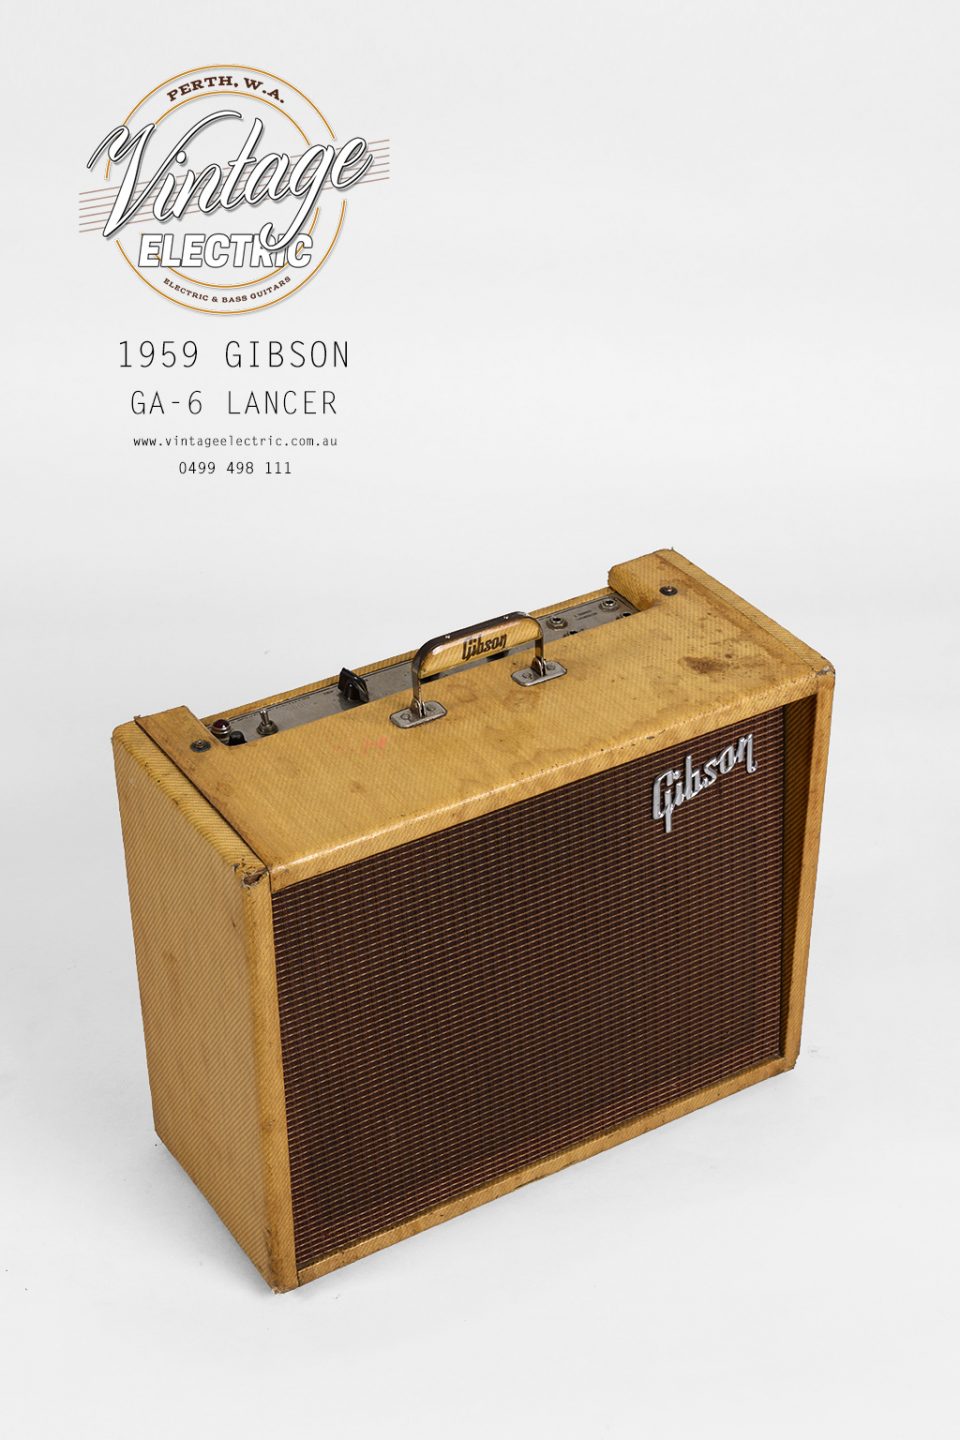 1959 Gibson GA-6 Lancer Top